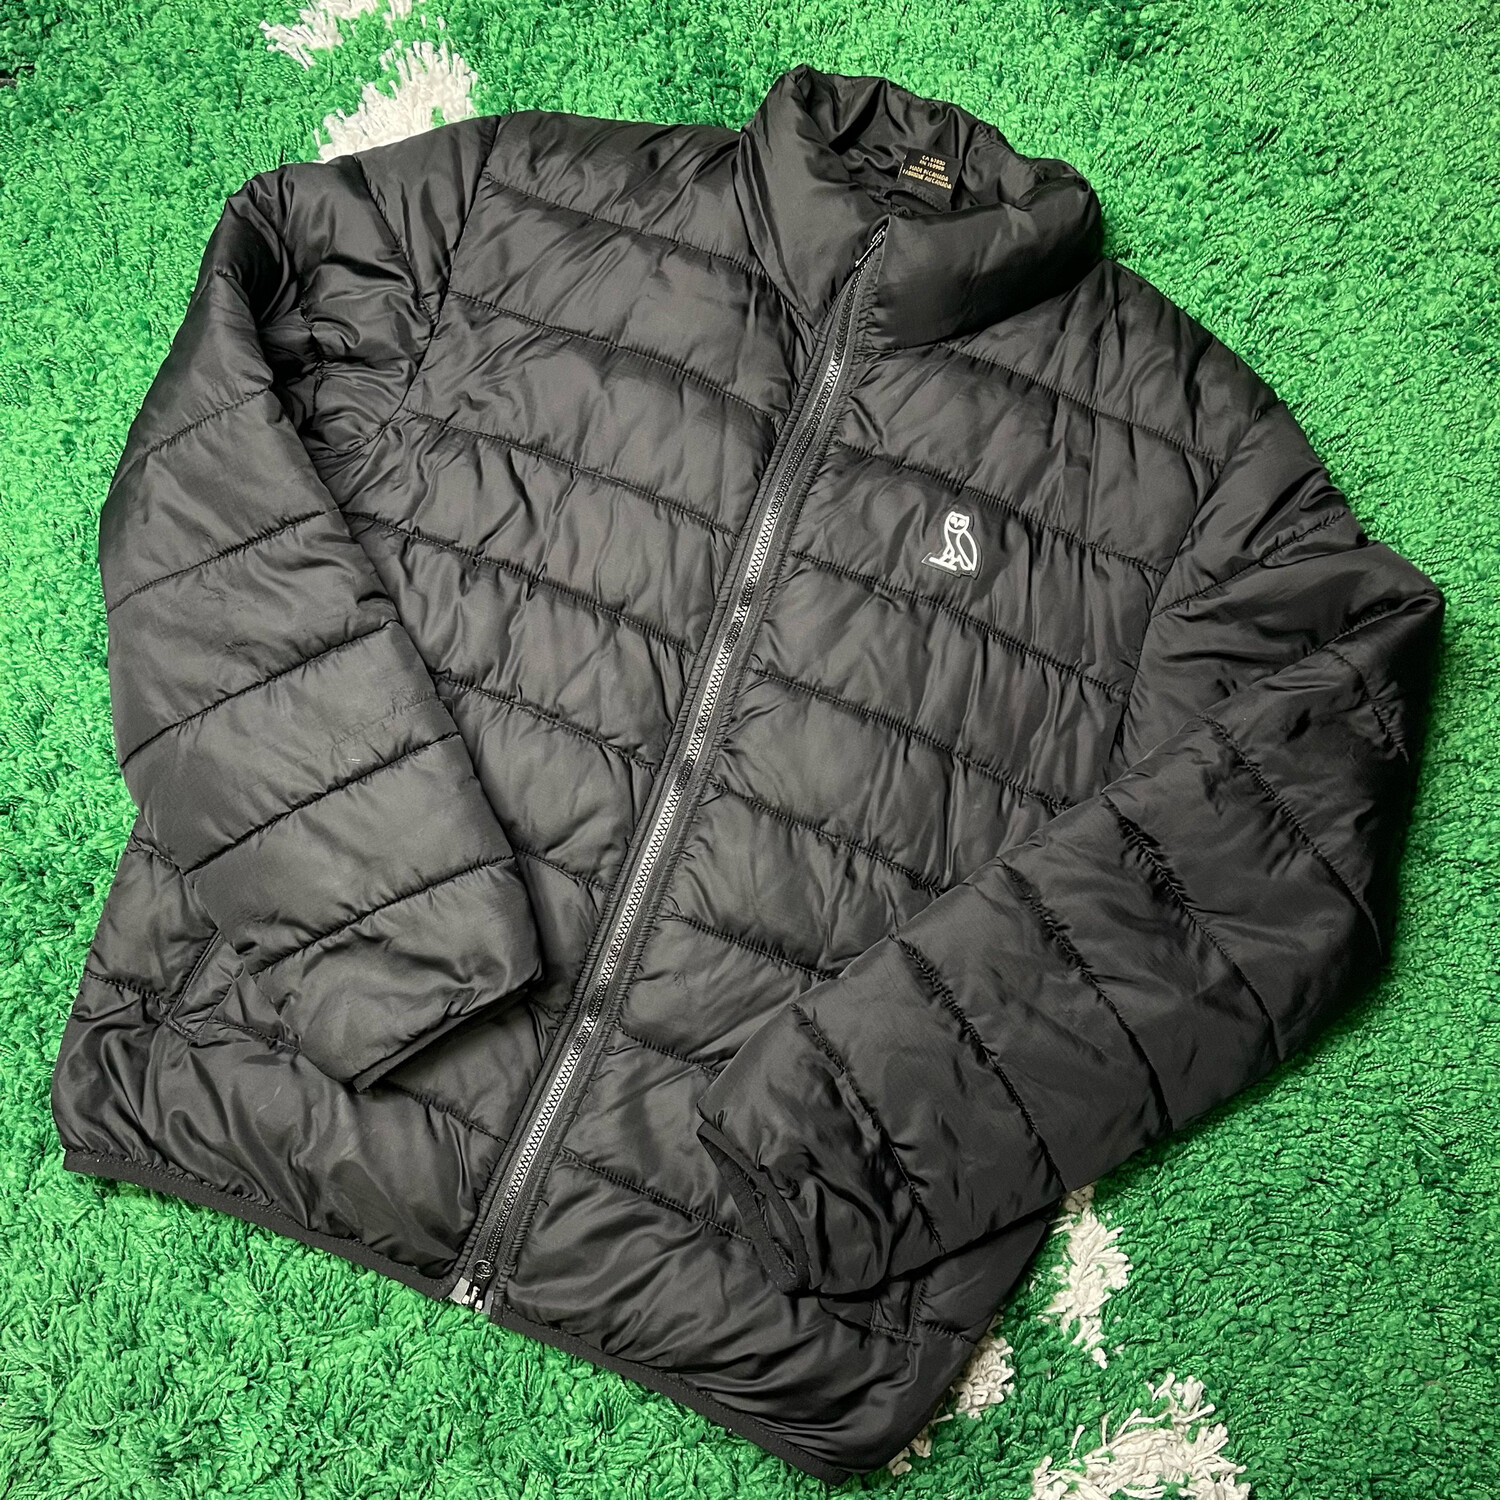 OVO Puffer Jacket Size Large